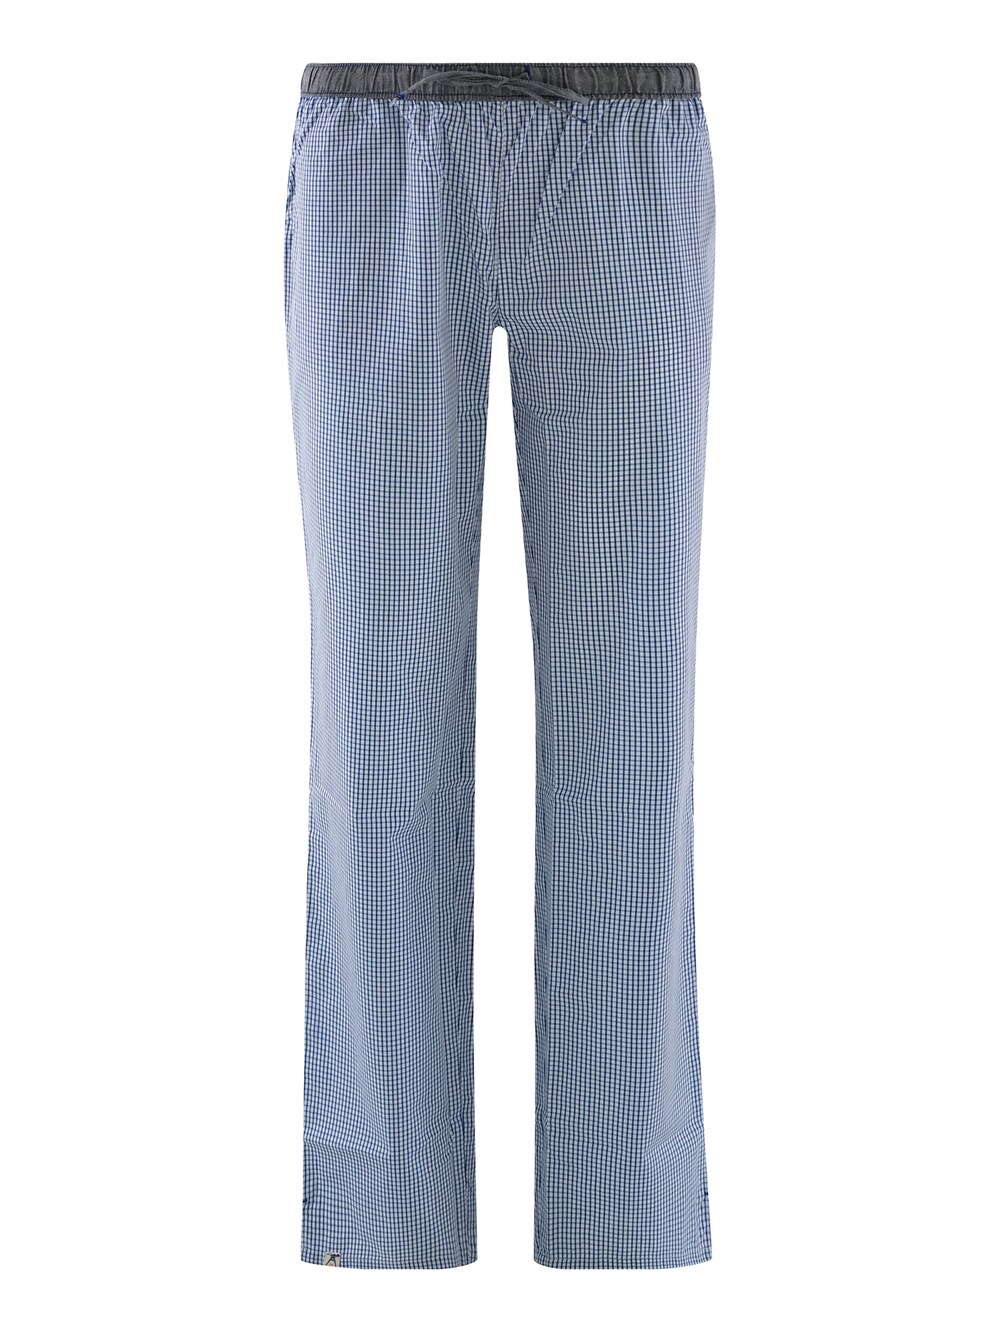 Пижамные штаны Luca David Olden Glory Pants, синий каталог luca s 88 105 muline luca s 105